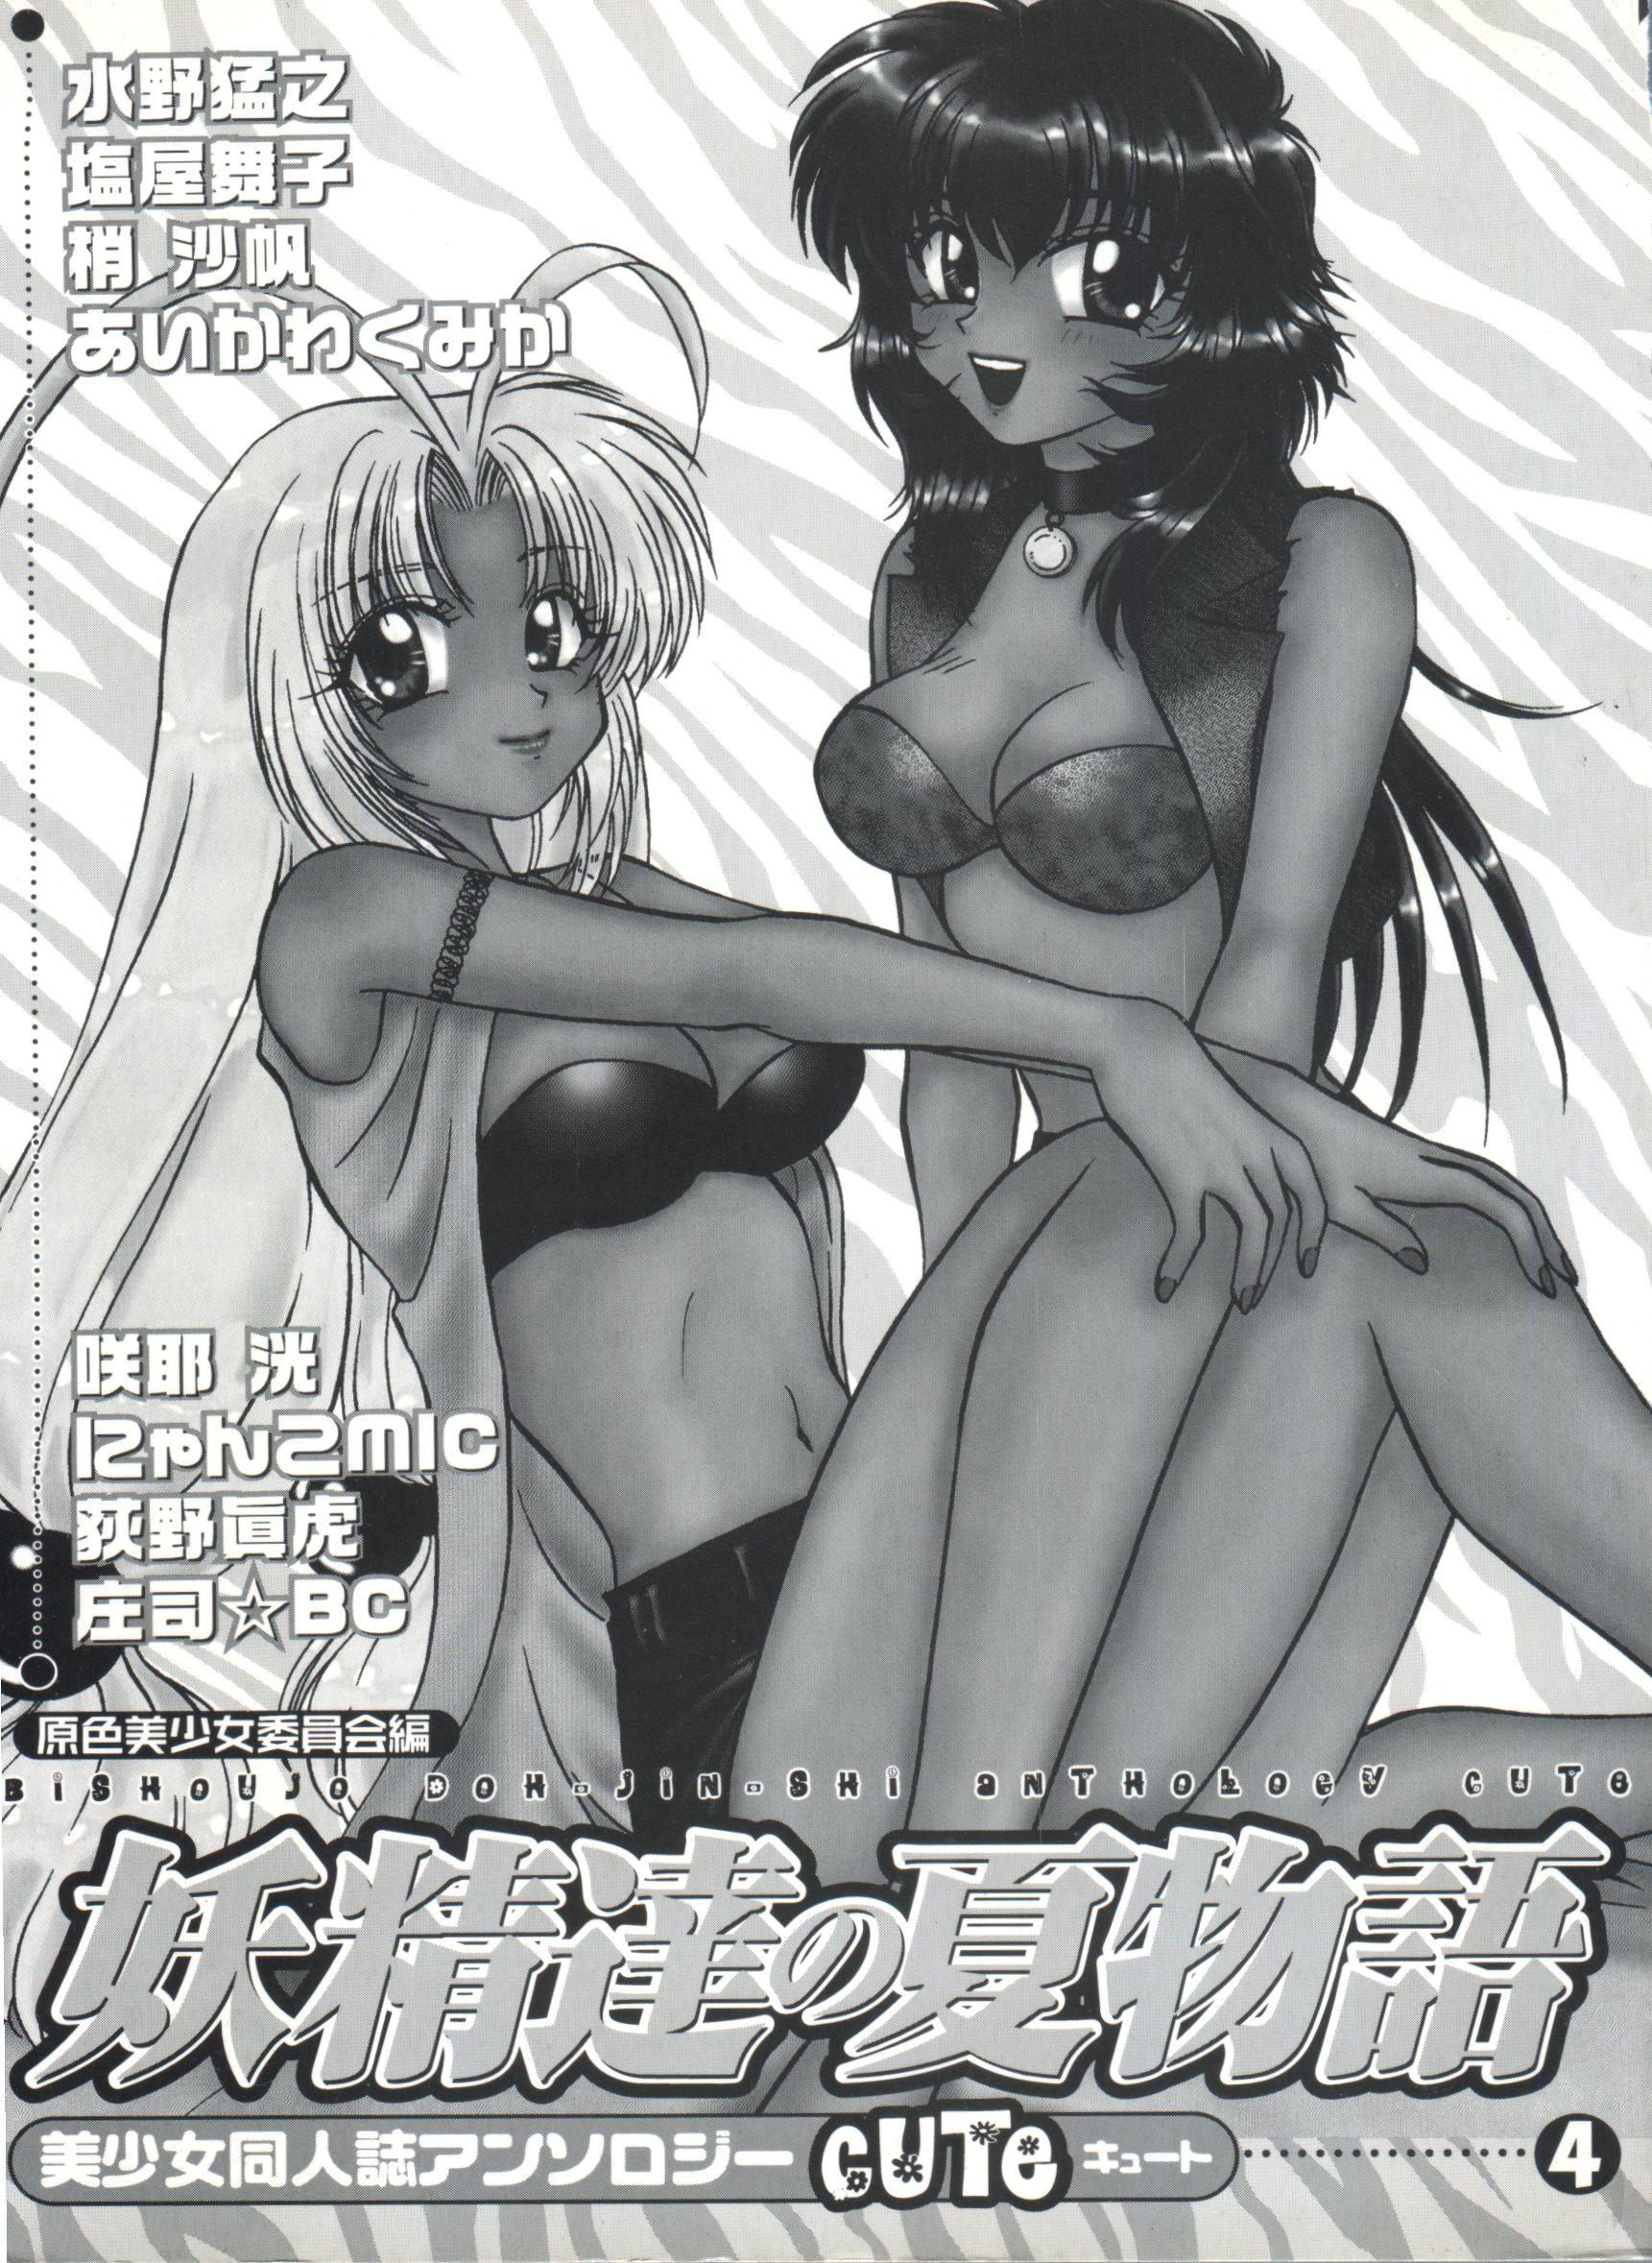 Hot Girl Porn Bishoujo Doujinshi Anthology Cute 4 - Sailor moon To heart Magic knight rayearth Kare kano Yu yu hakusho Kamikaze kaitou jeanne Edging - Page 2